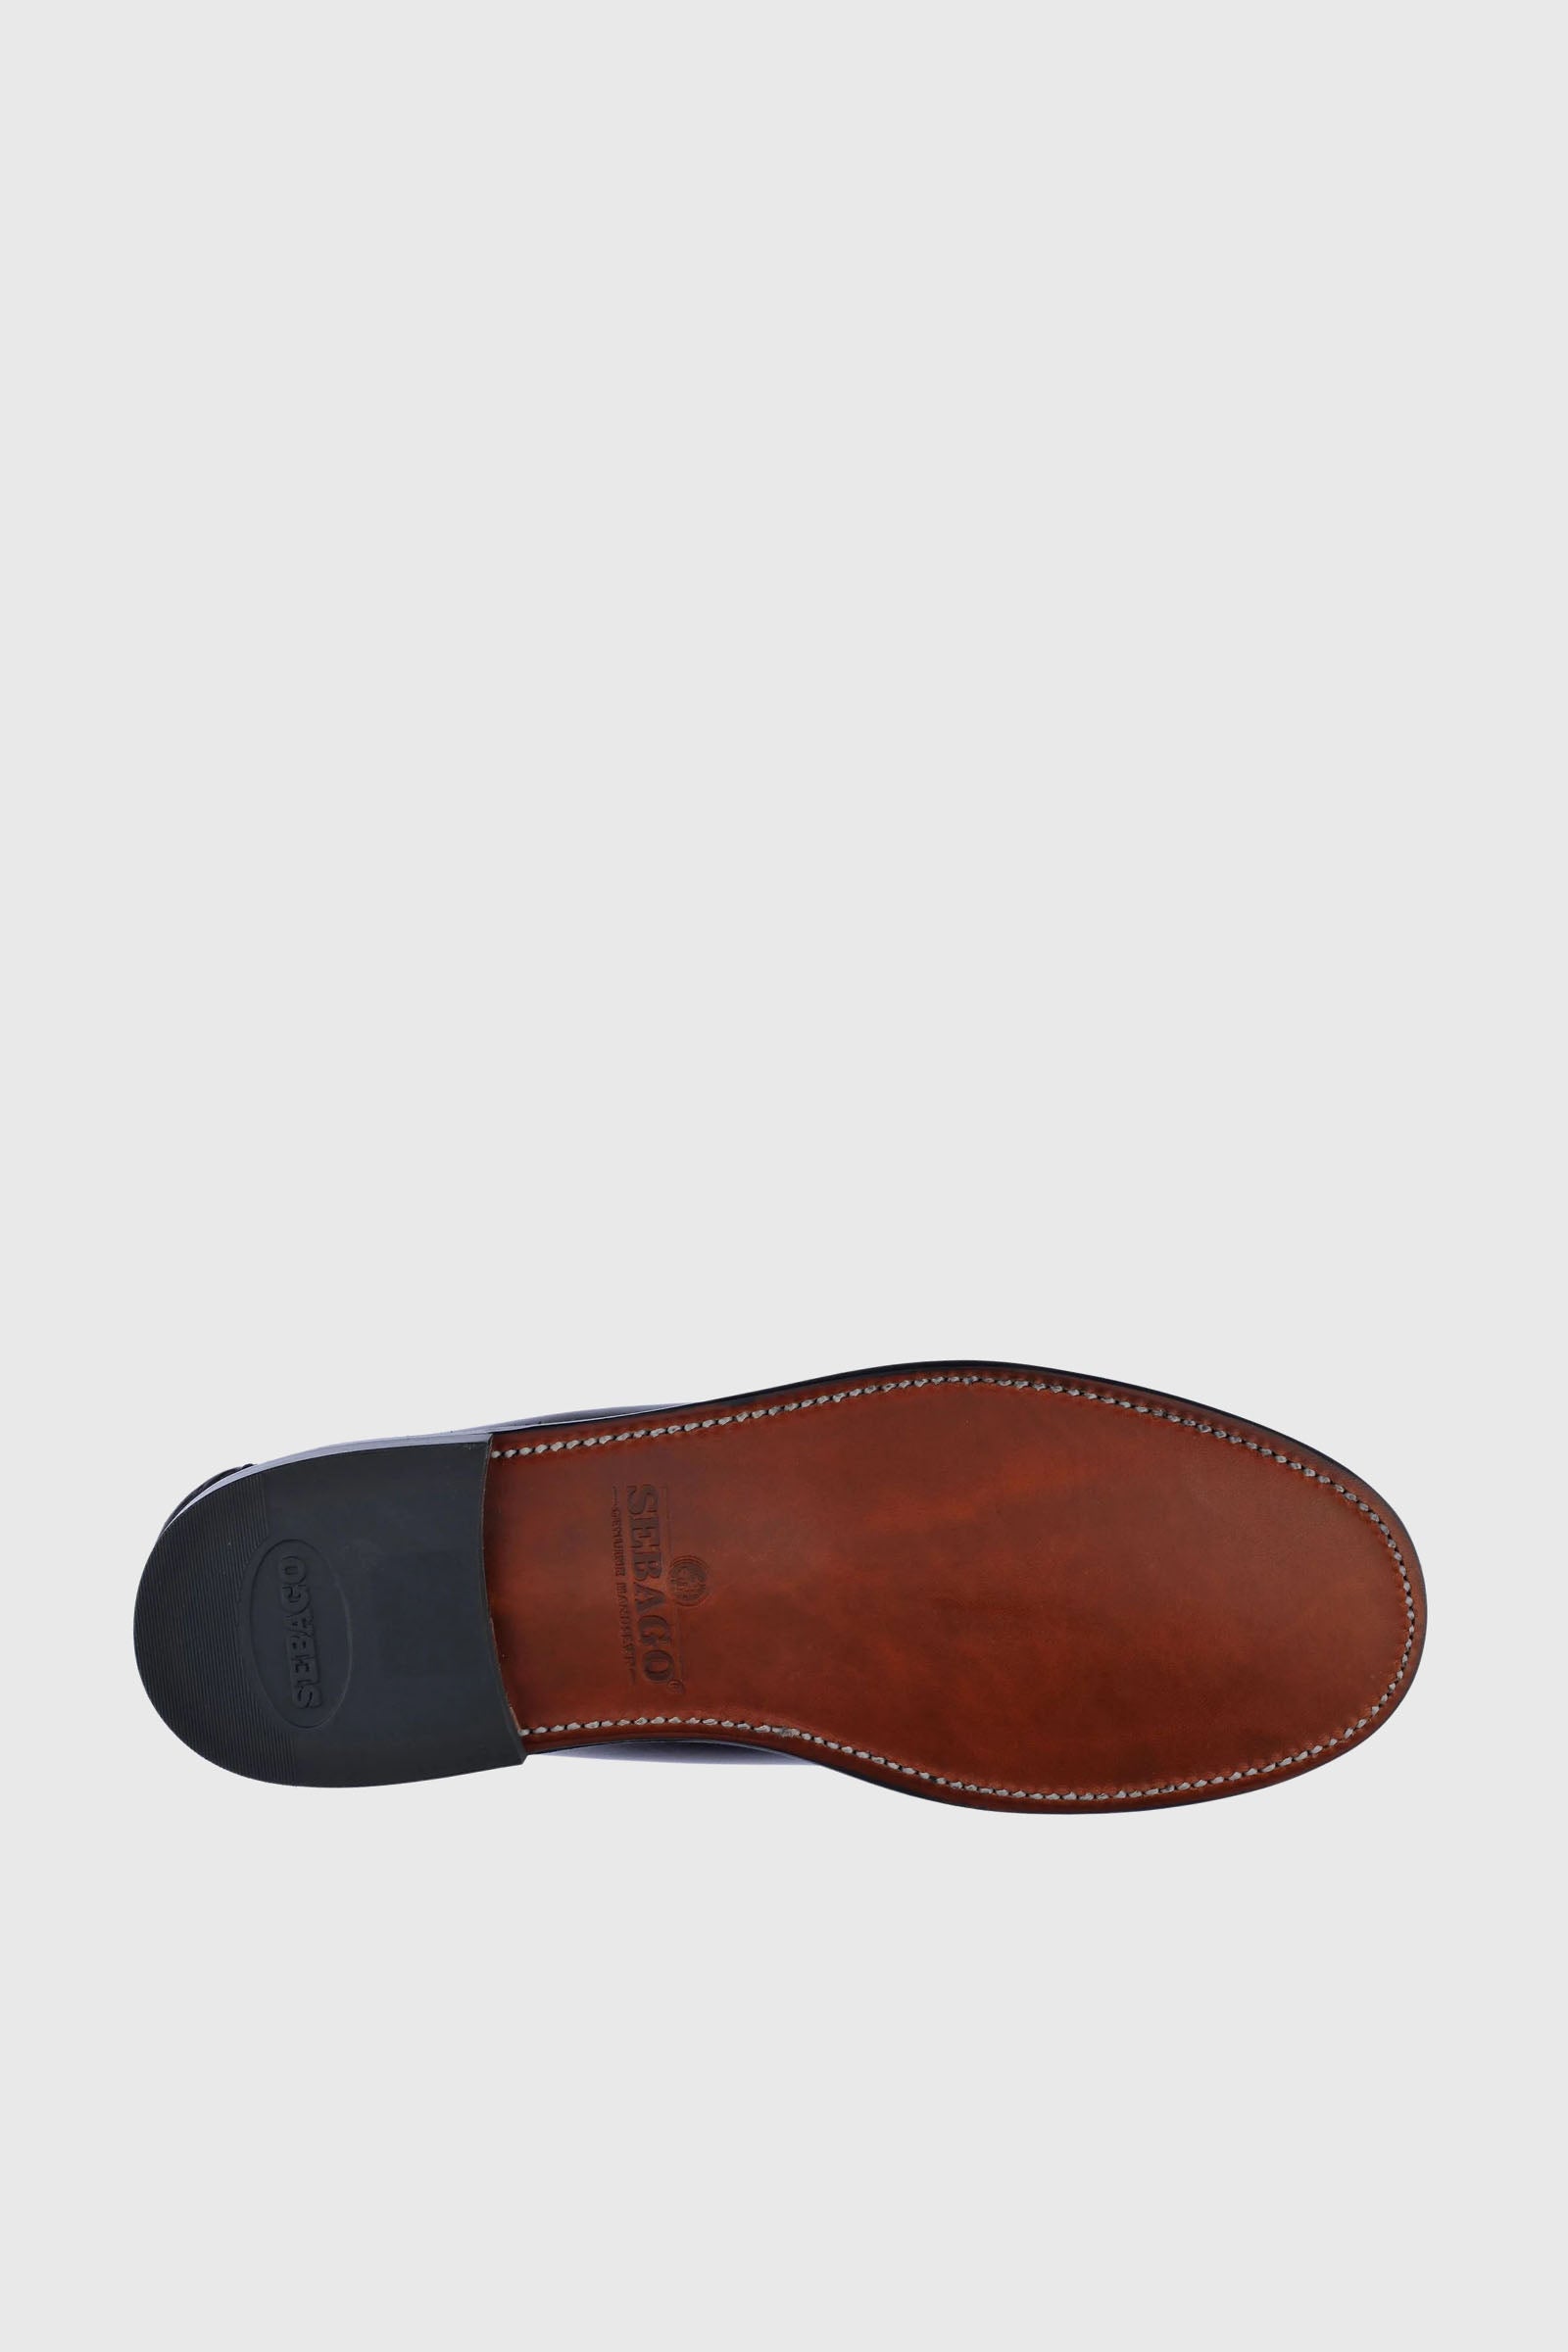 Sebago Classic Dan Loafer in Brown/Burgundy Leather - 3